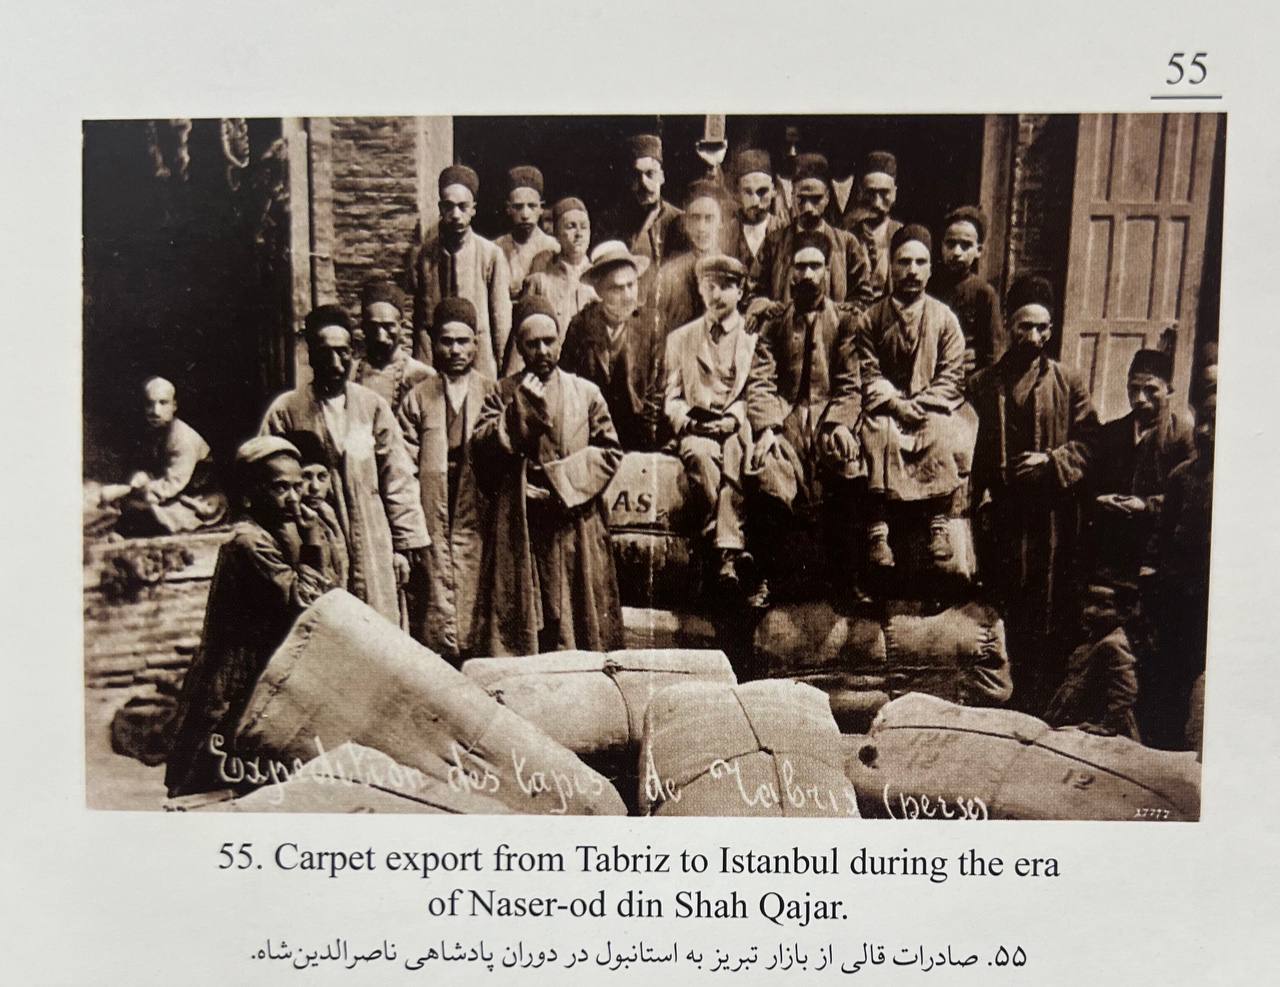 evolution of Iranian carpet in Qajar period